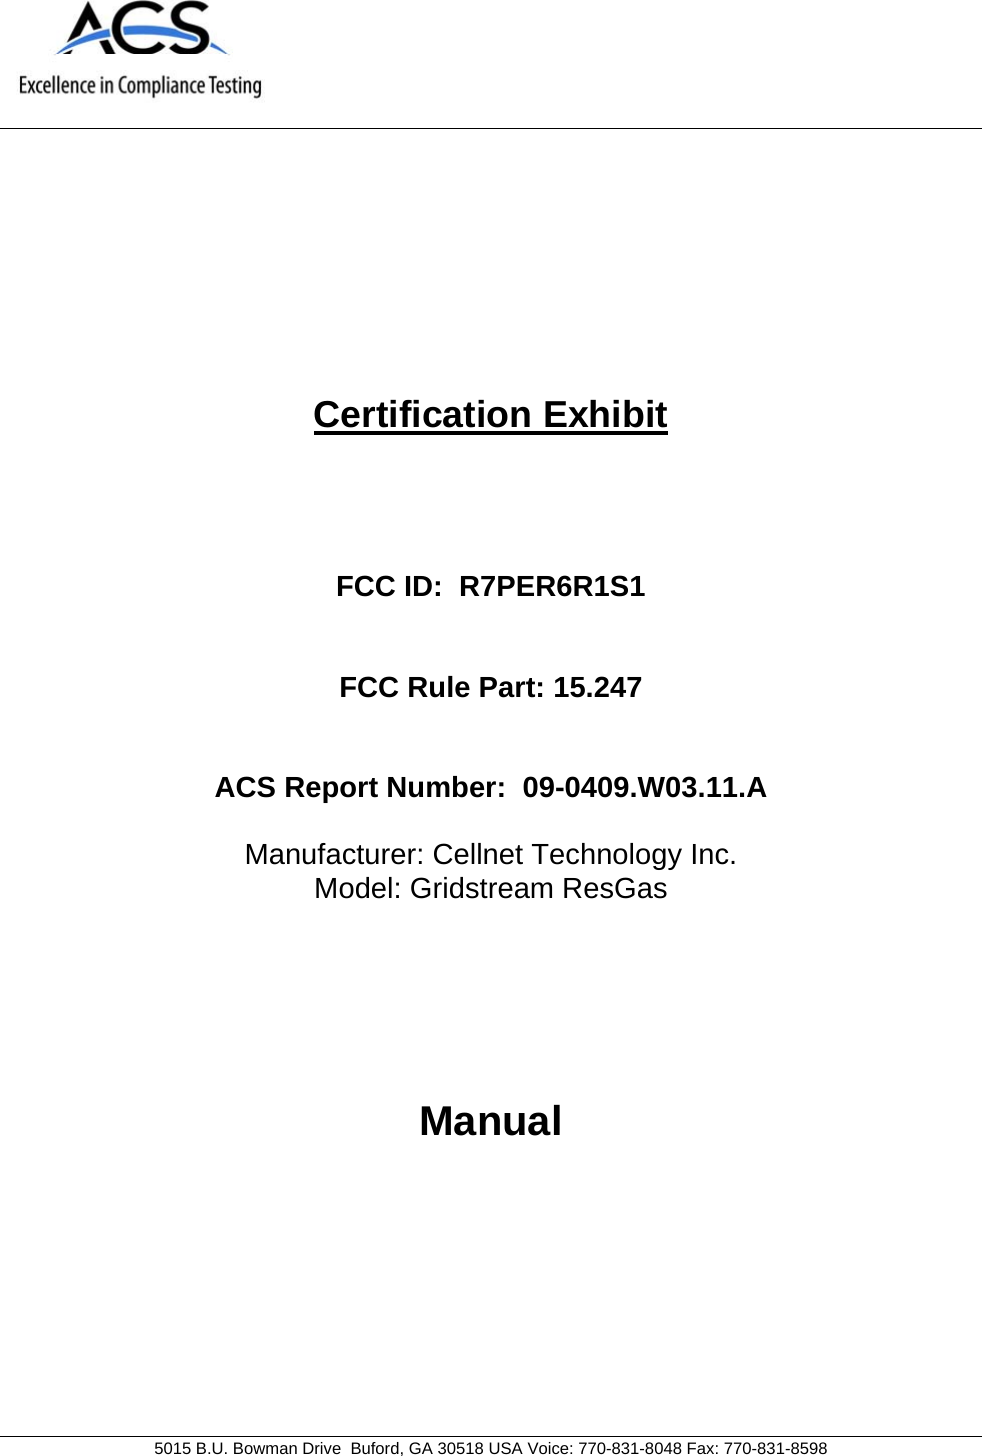     5015 B.U. Bowman Drive  Buford, GA 30518 USA Voice: 770-831-8048 Fax: 770-831-8598   Certification Exhibit     FCC ID:  R7PER6R1S1   FCC Rule Part: 15.247   ACS Report Number:  09-0409.W03.11.A  Manufacturer: Cellnet Technology Inc. Model: Gridstream ResGas     Manual  